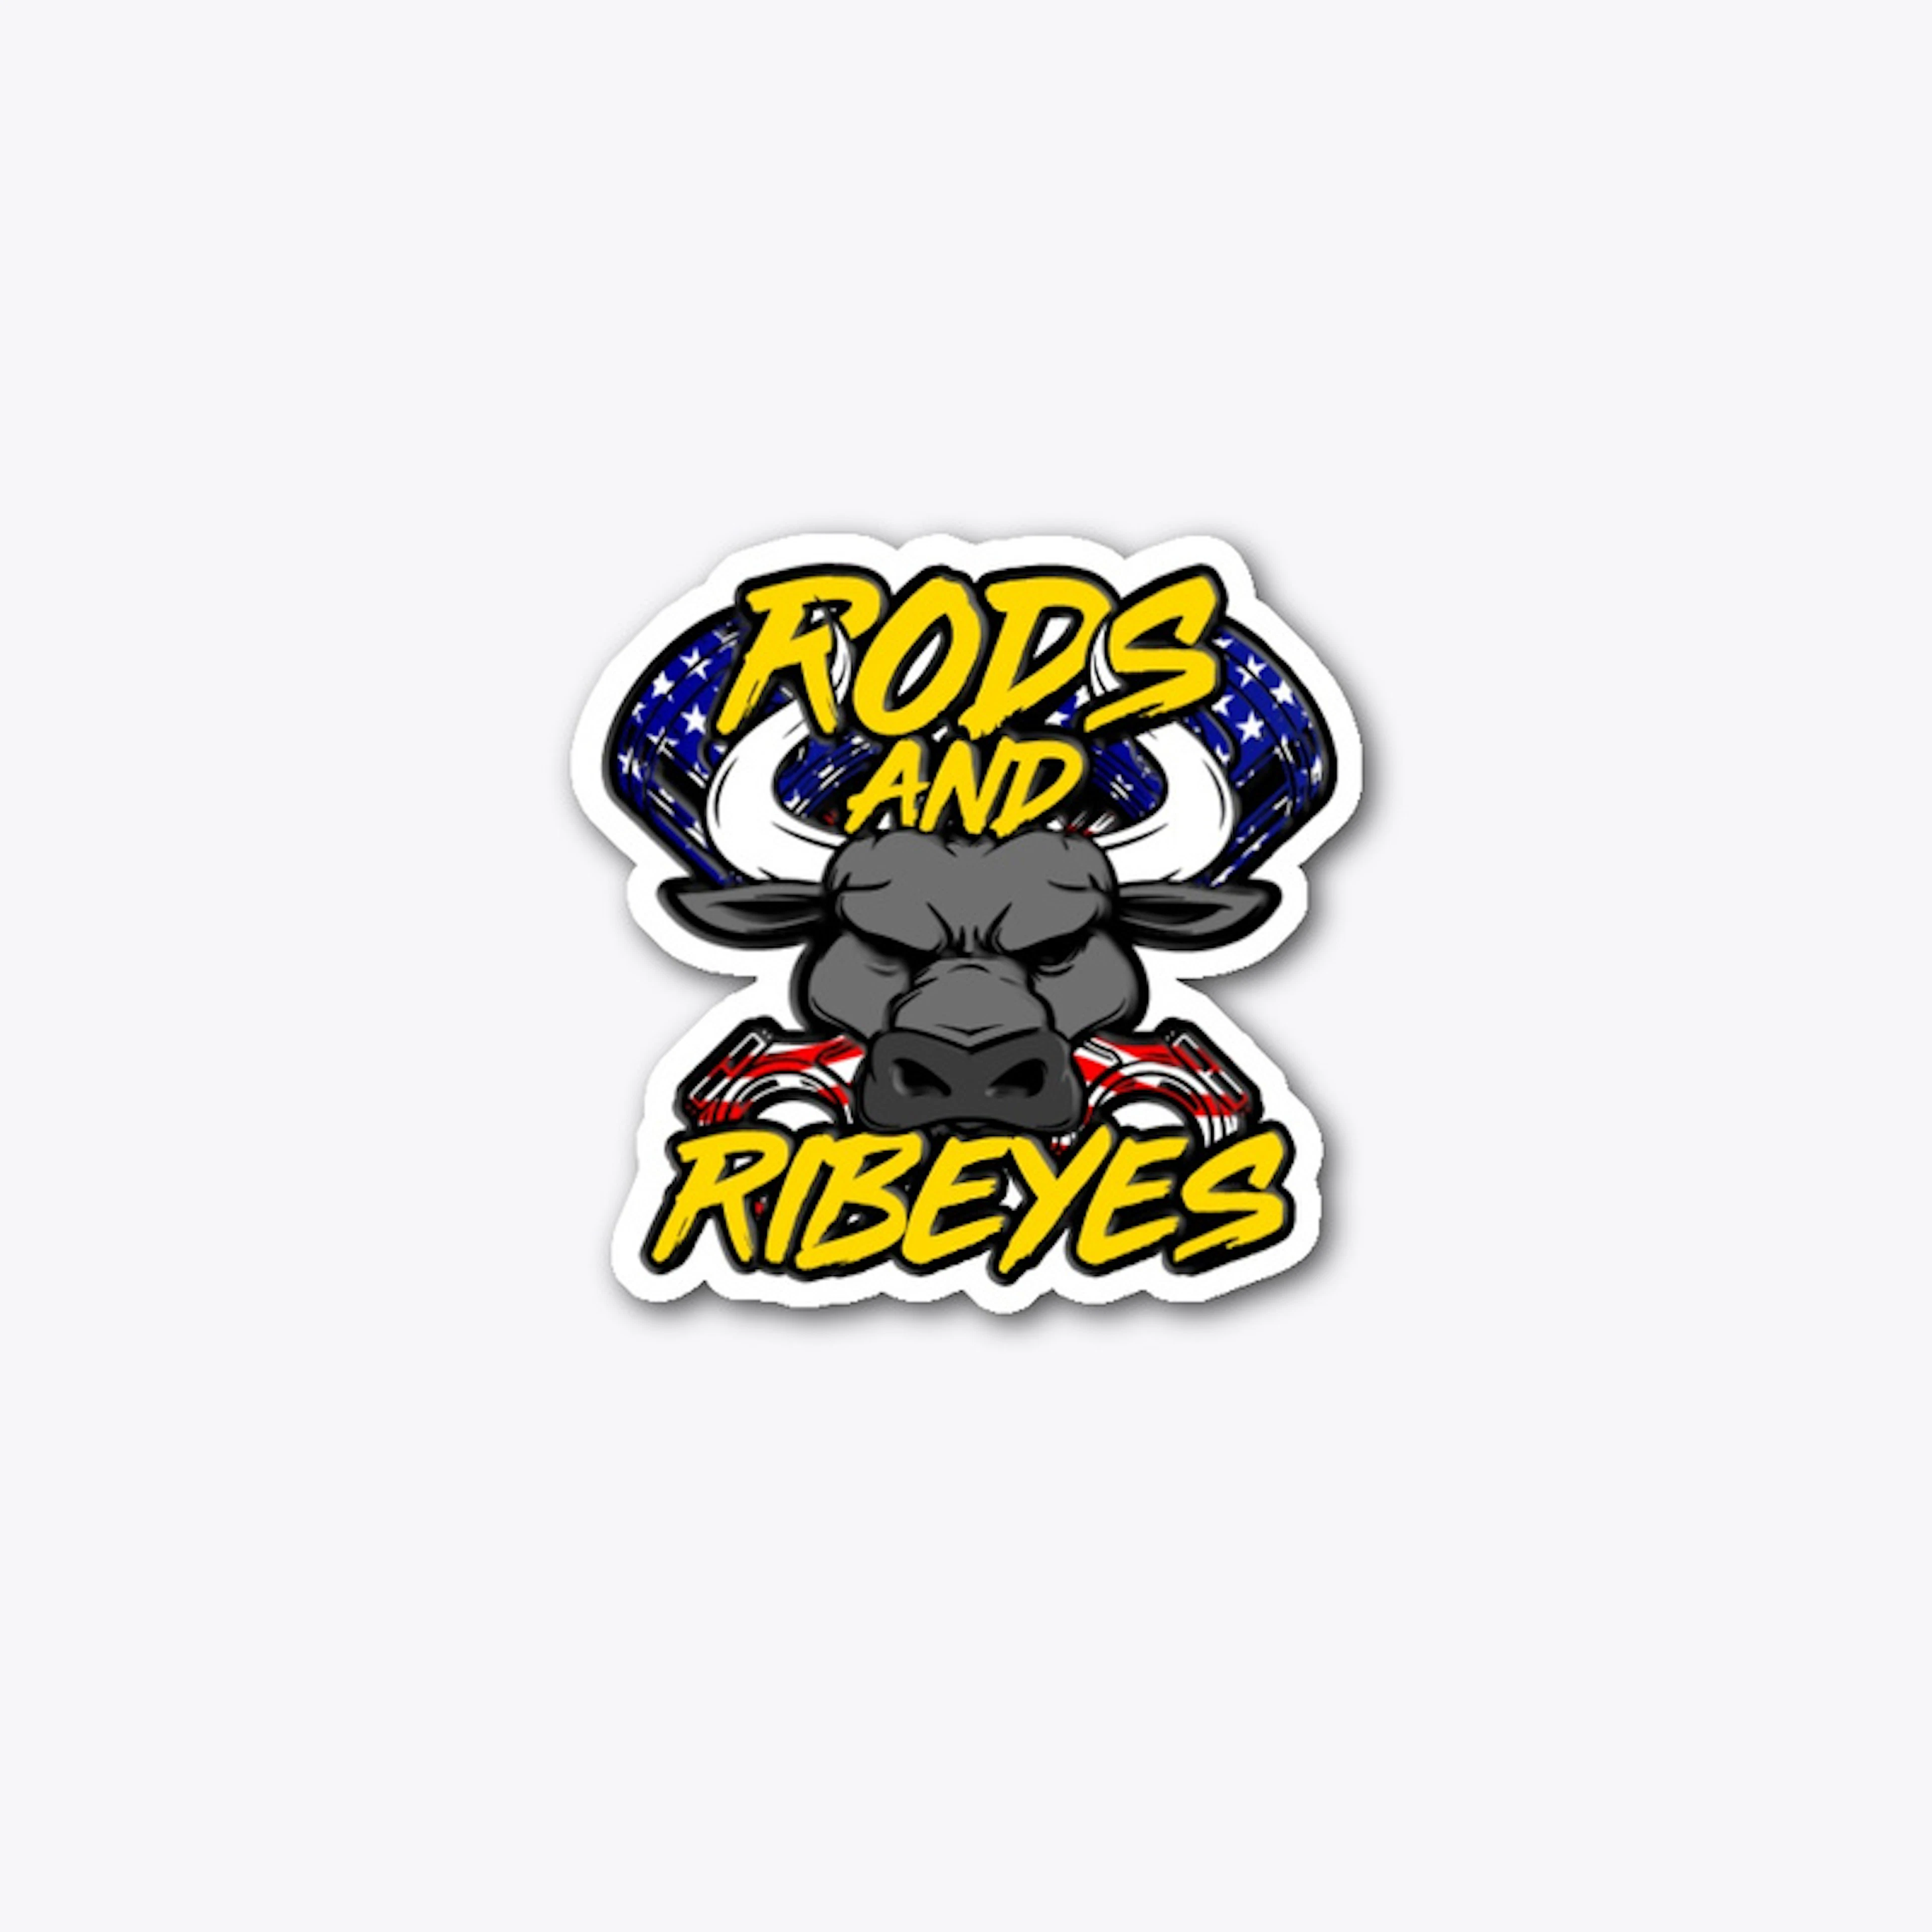 Rods & Ribeyes MERICA sticker